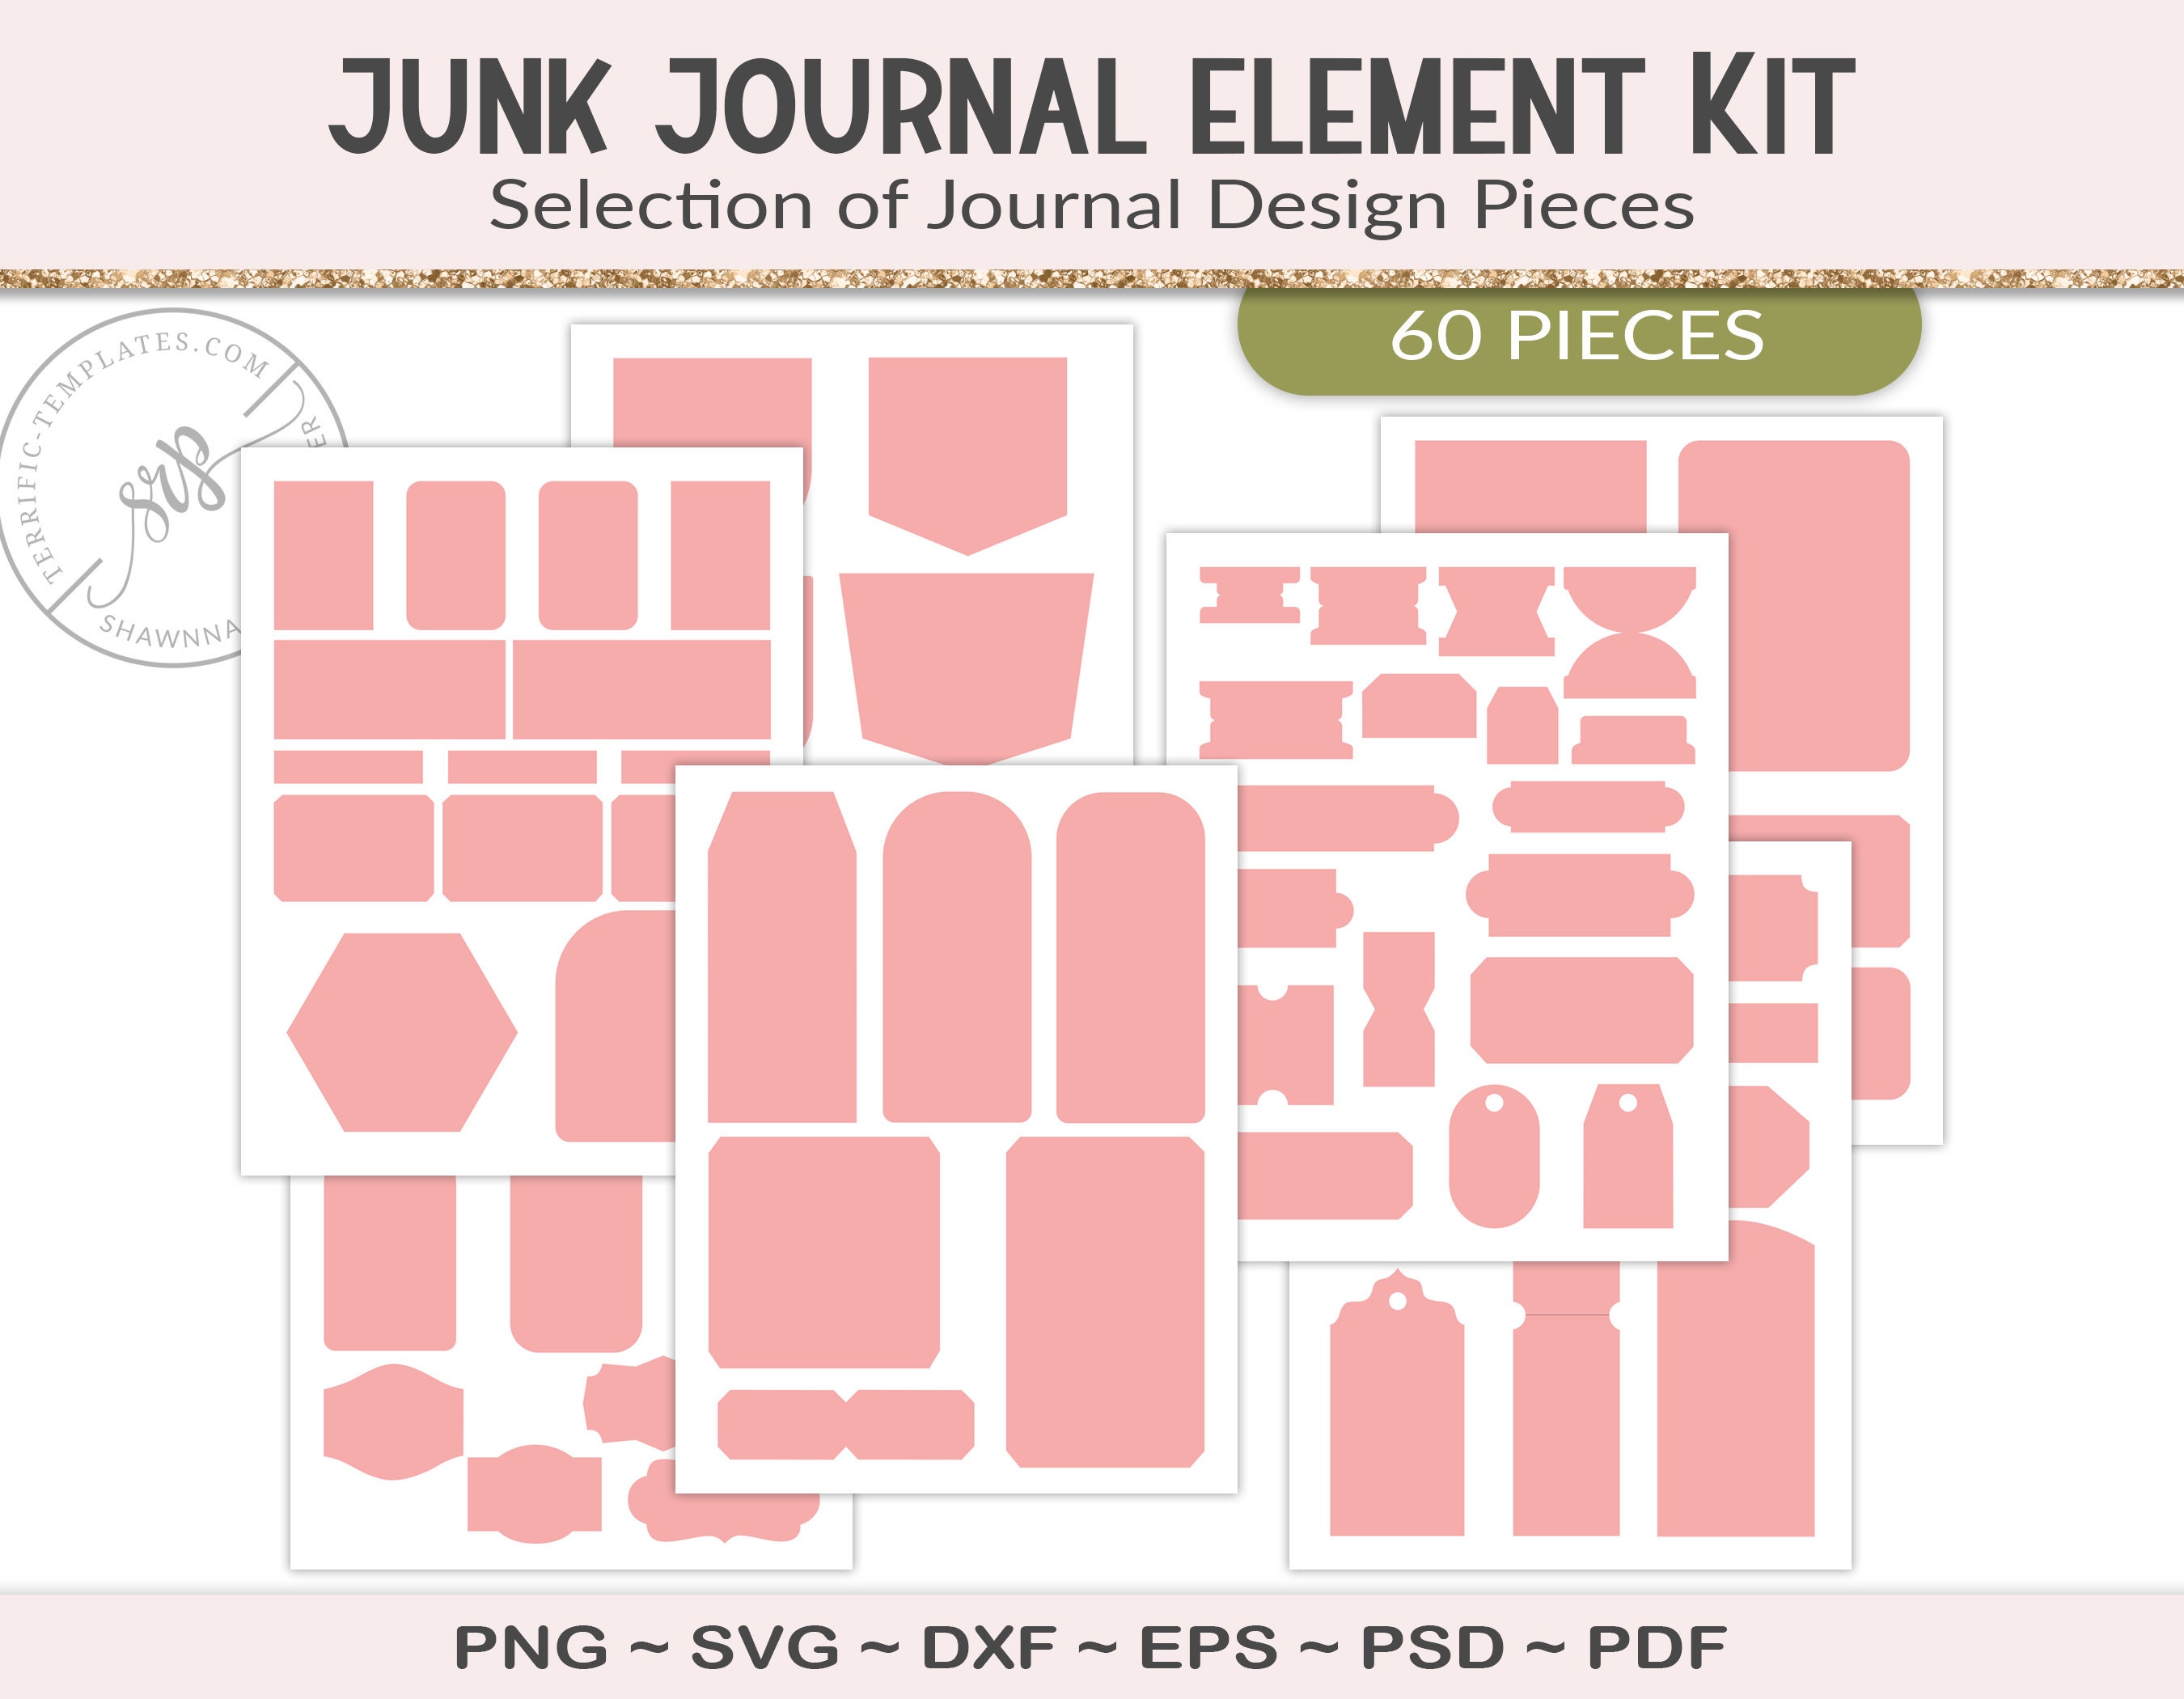 Blank Gift Tags Junk Journals Graphic by deborahannesdigital